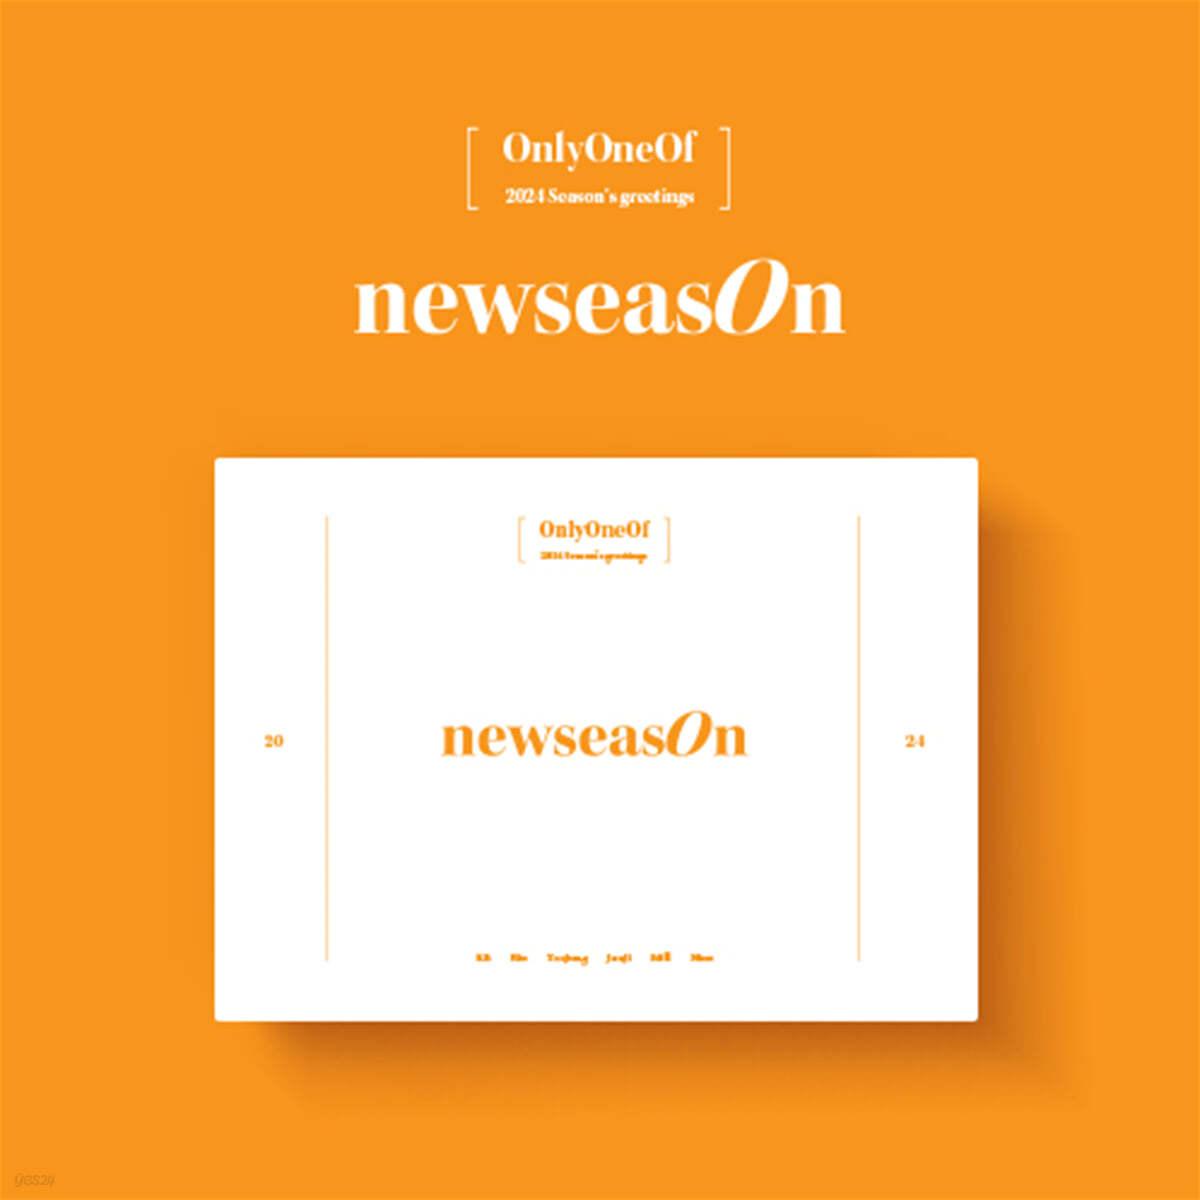 OnlyOneOf – 2024 SEASON’S GREETINGS [newseasOn] - KKANG